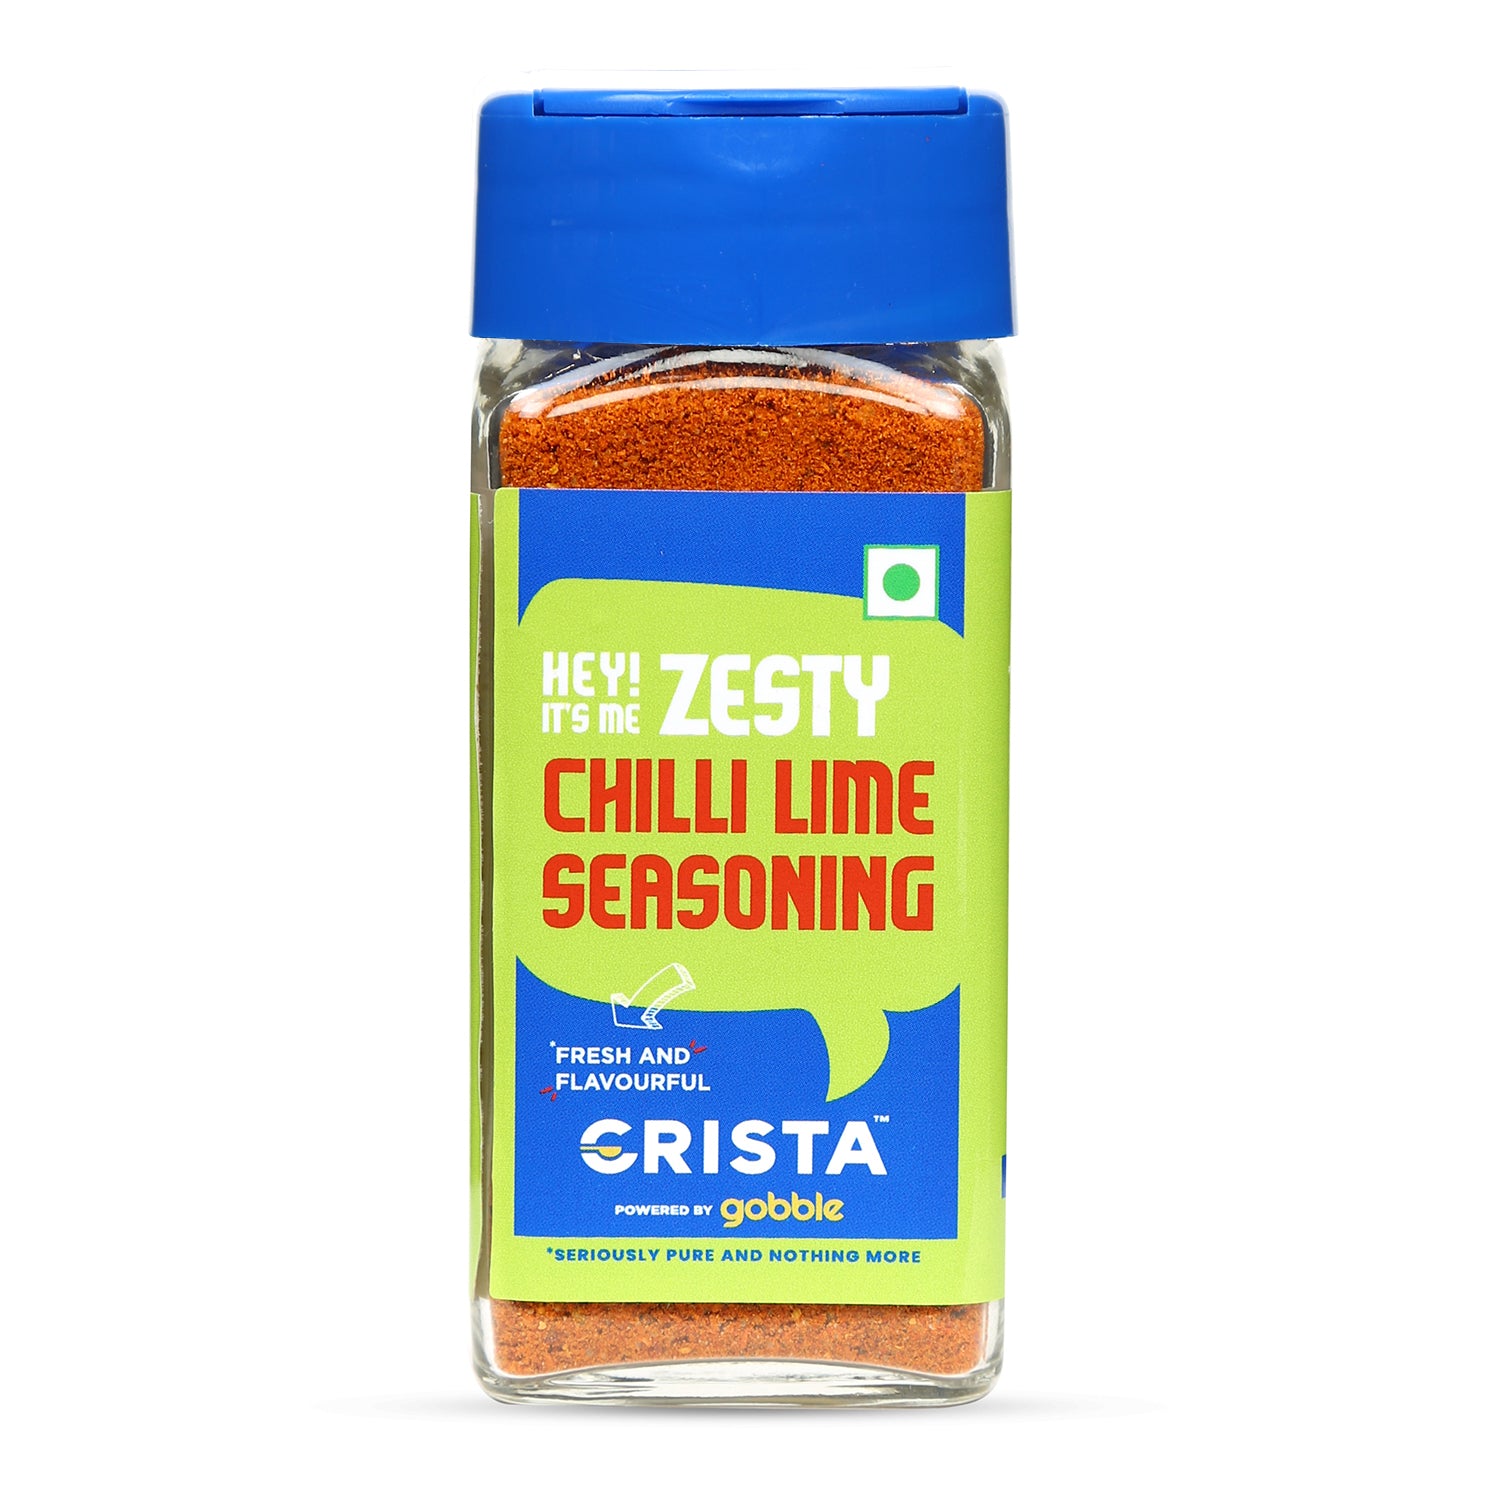 CRISTA Zesty Chilli Lime Seasoning